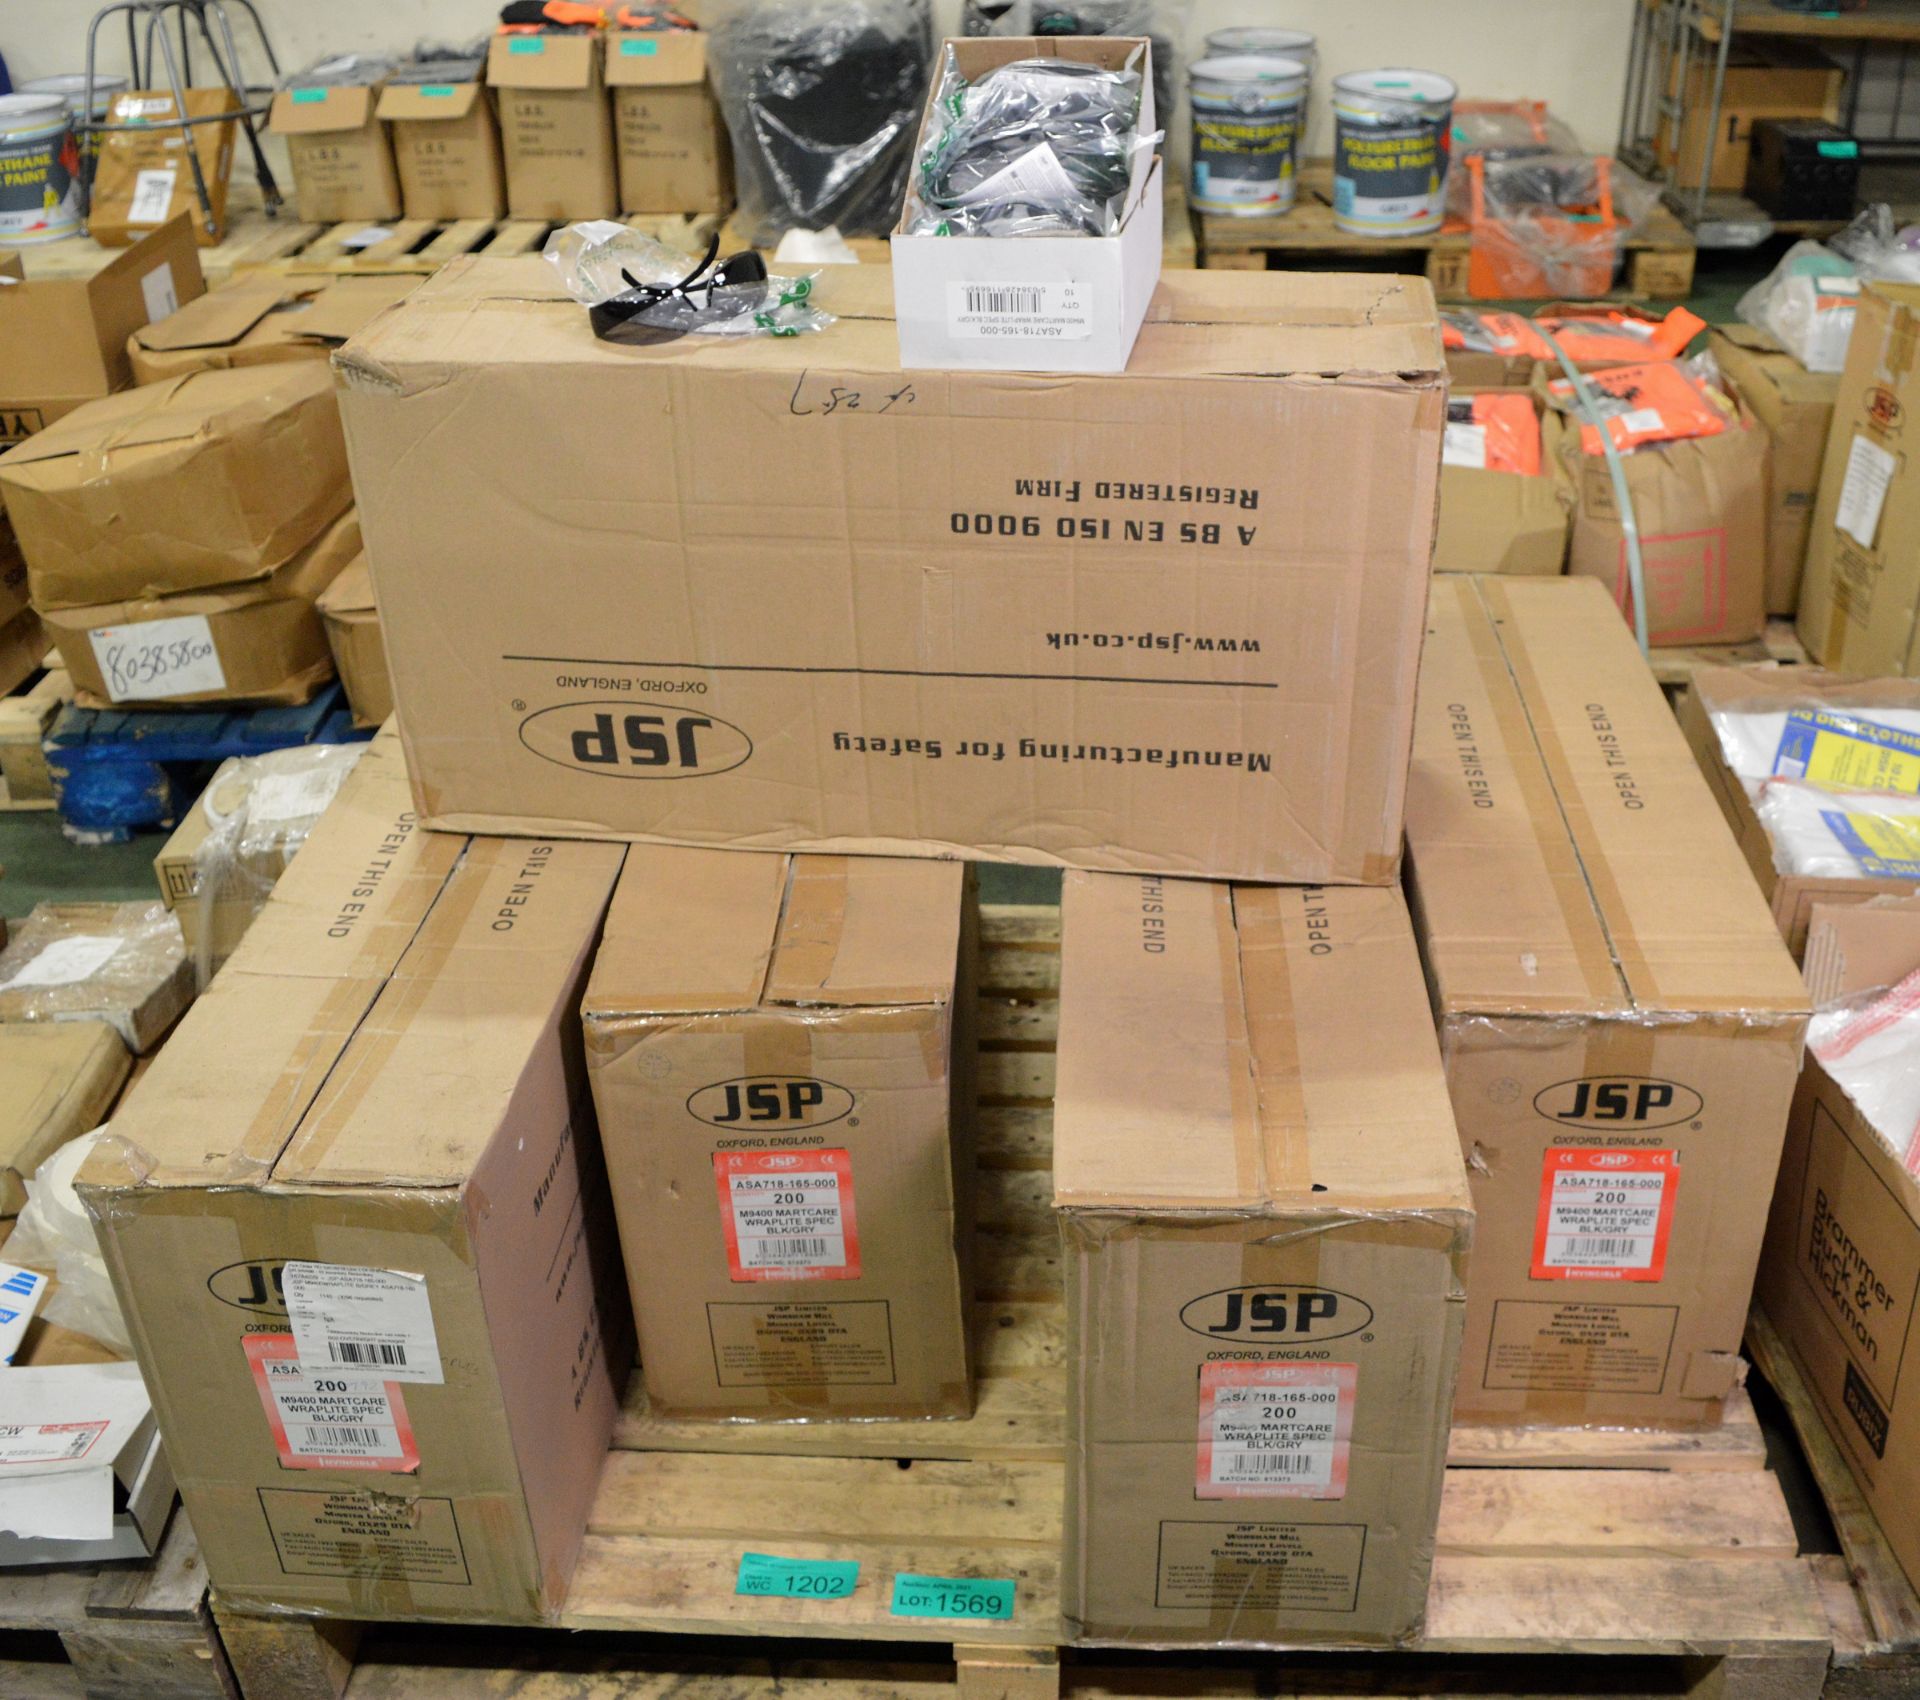 5x Boxes of JSP M9400 Martcare Wraplite Safety Glasses - Black/Grey - 200 pairs per box